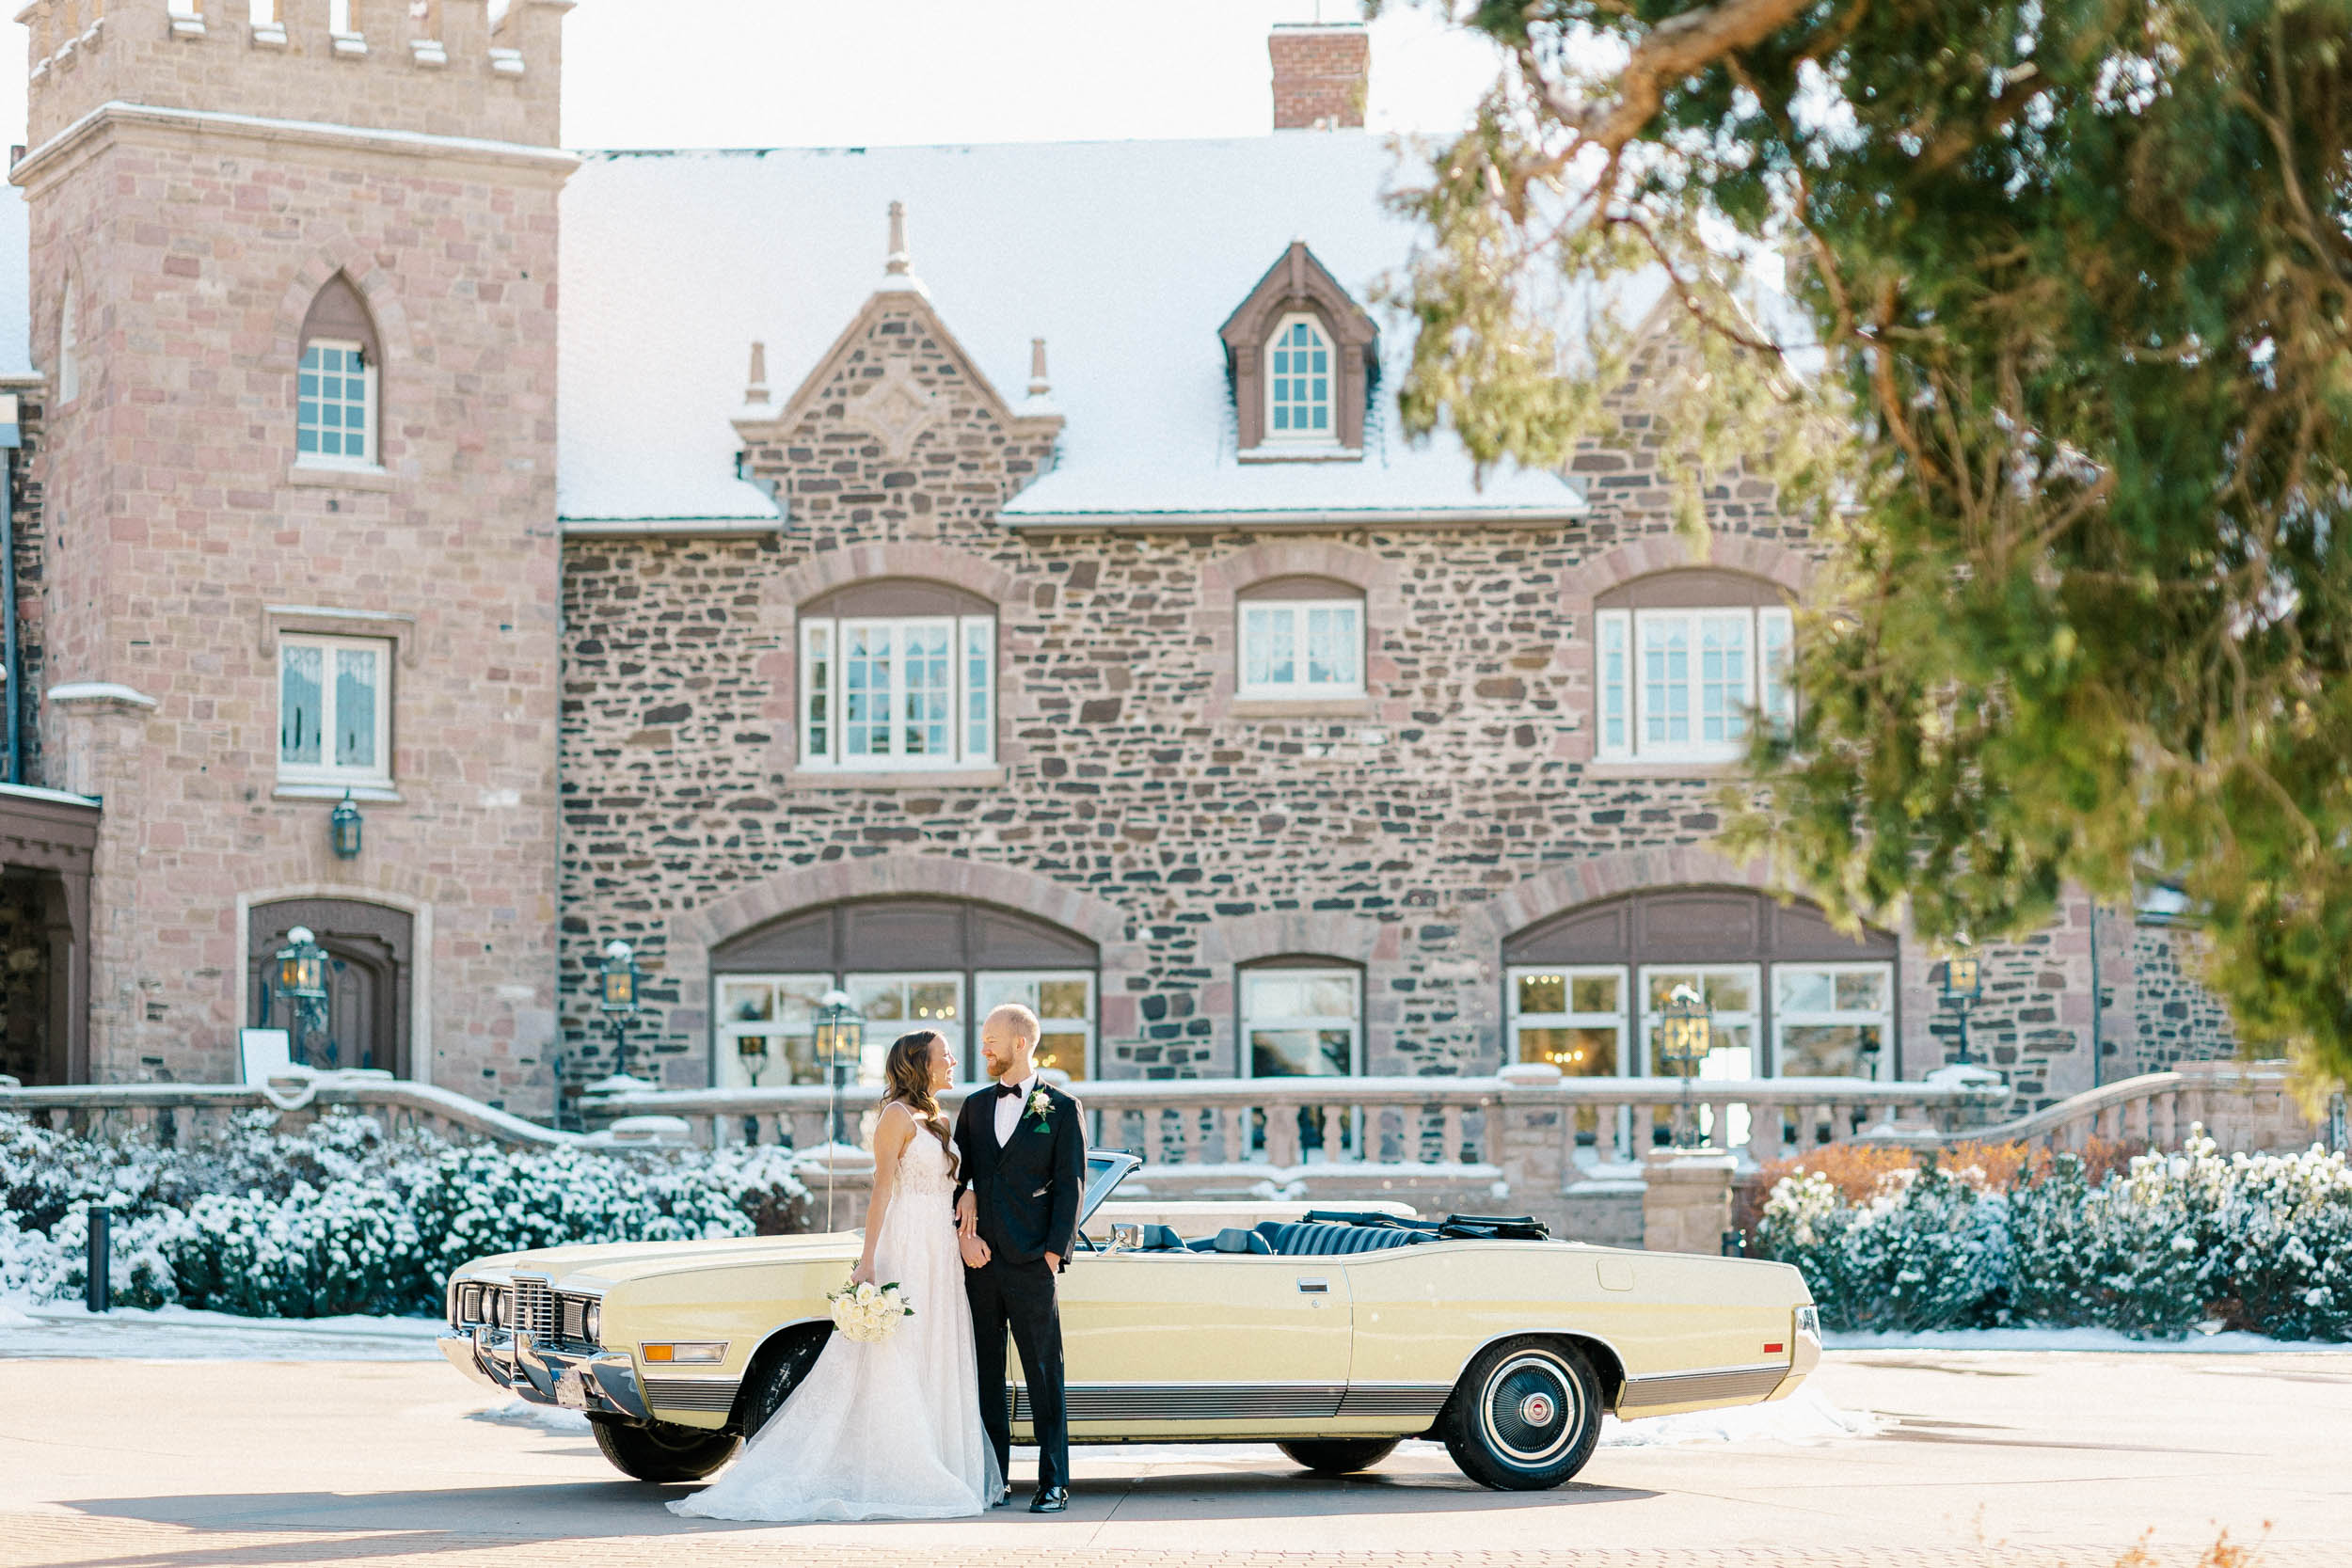 Bride & Groom standing in front of vintage getaway car at the Highlands Ranch Mansion